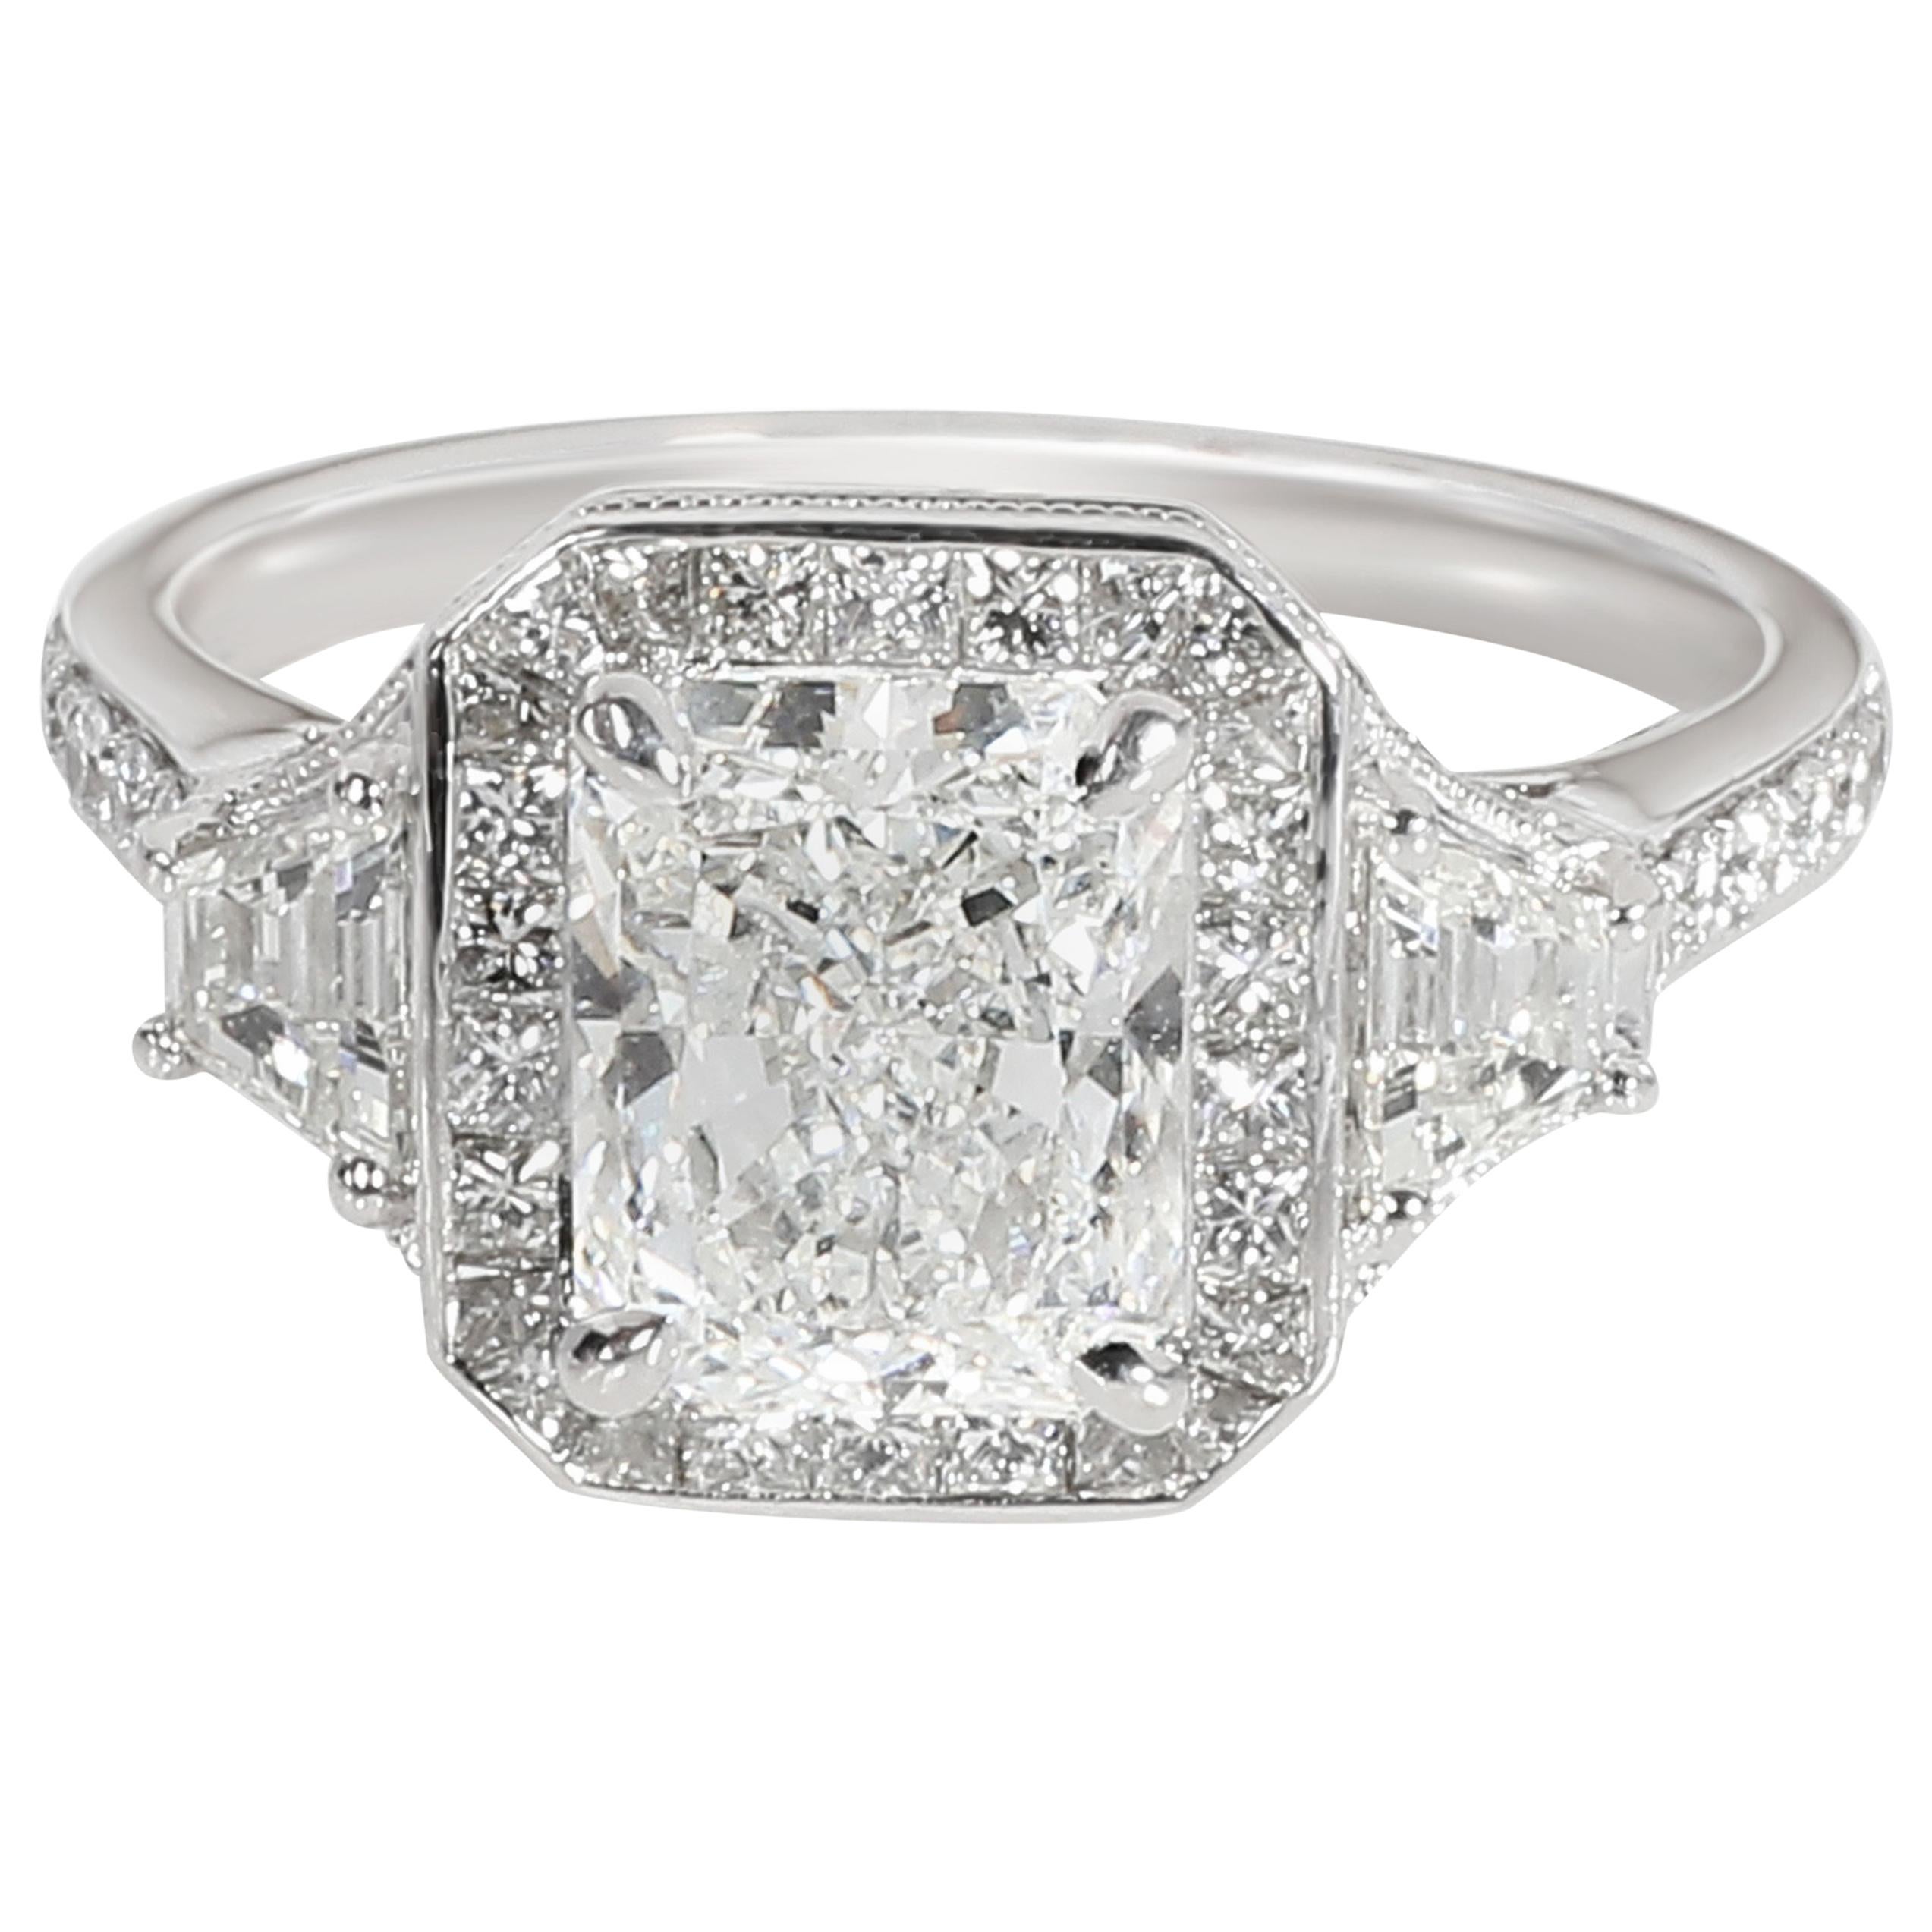 Radiant Halo Diamond Engagement Ring in Platinum GIA Certified F VVS2 2.81 Carat